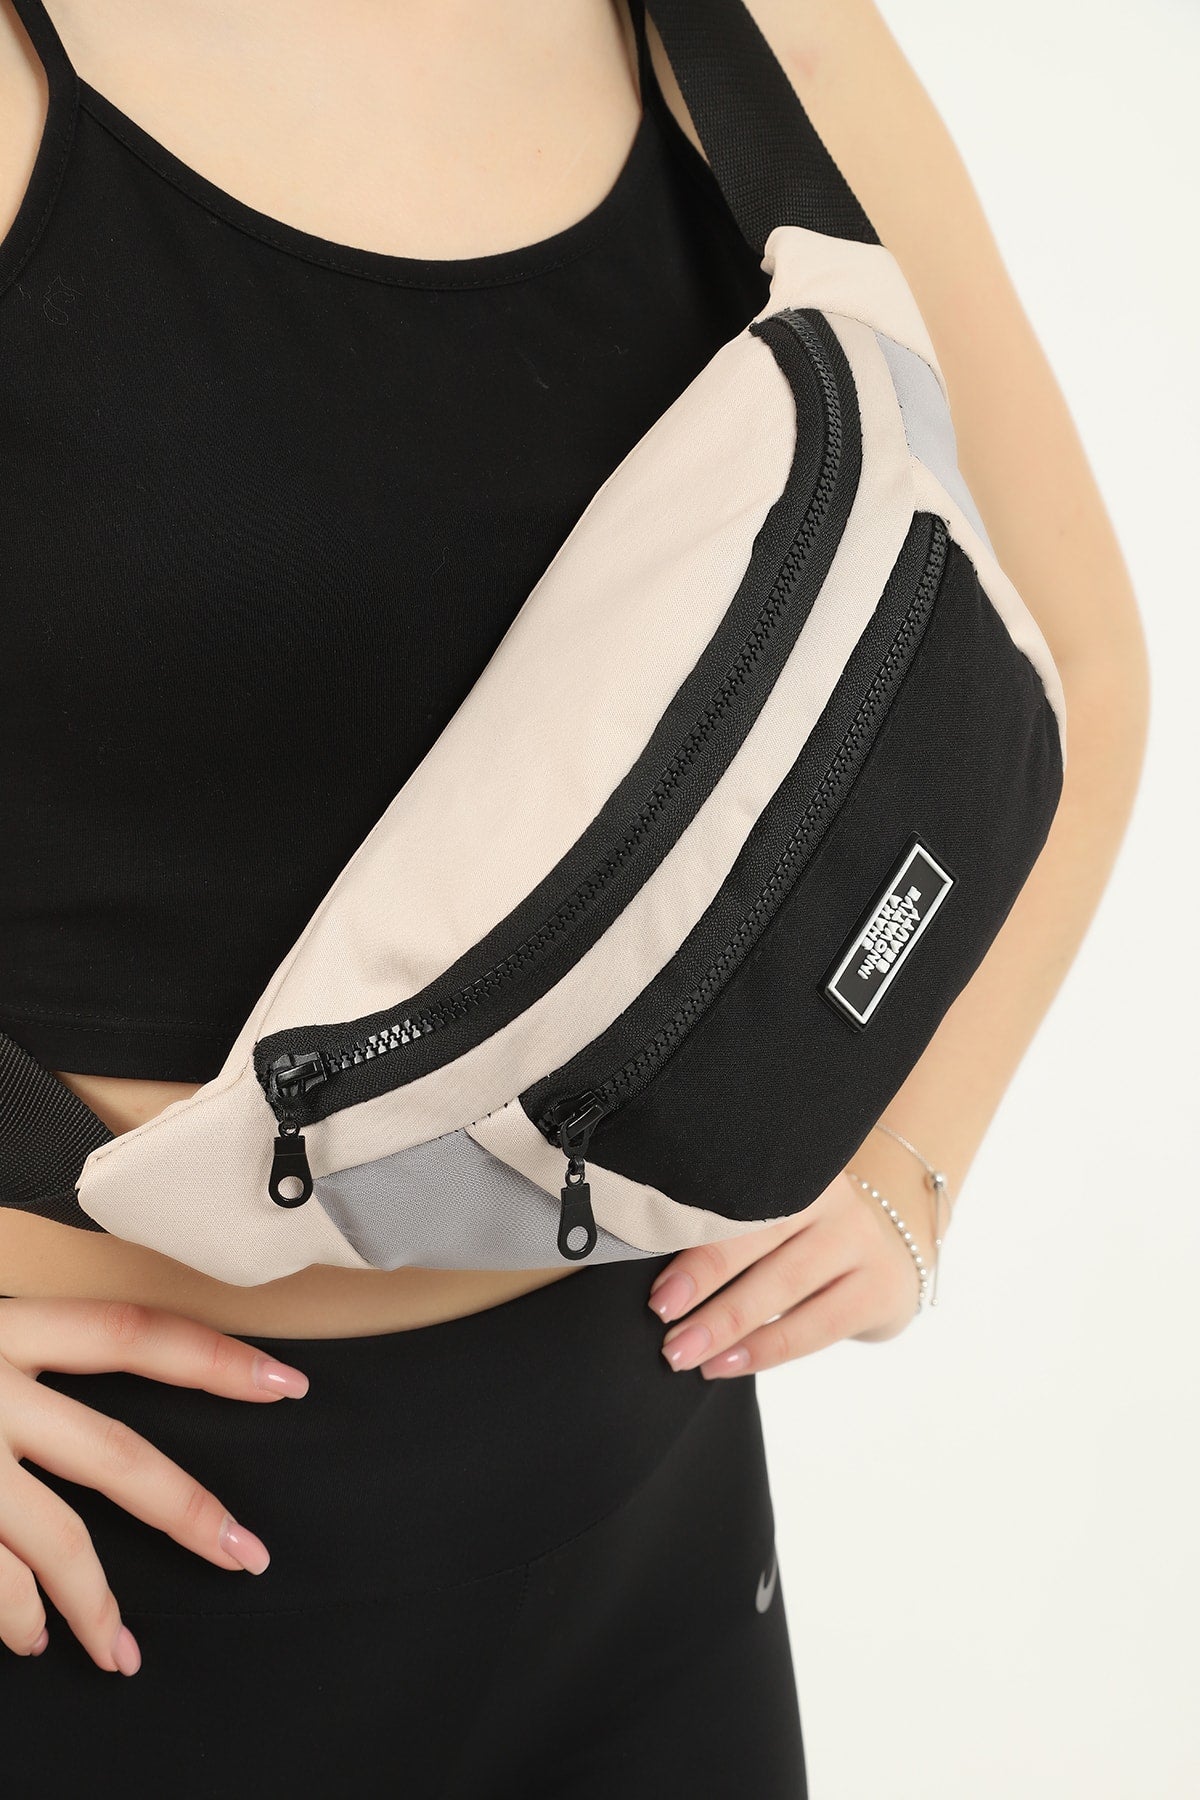 Cream/gray/black U8 2-Compartment Adjustable Cross Strap Canvas Unisex Waist And Shoulder Bag E:38 B:17